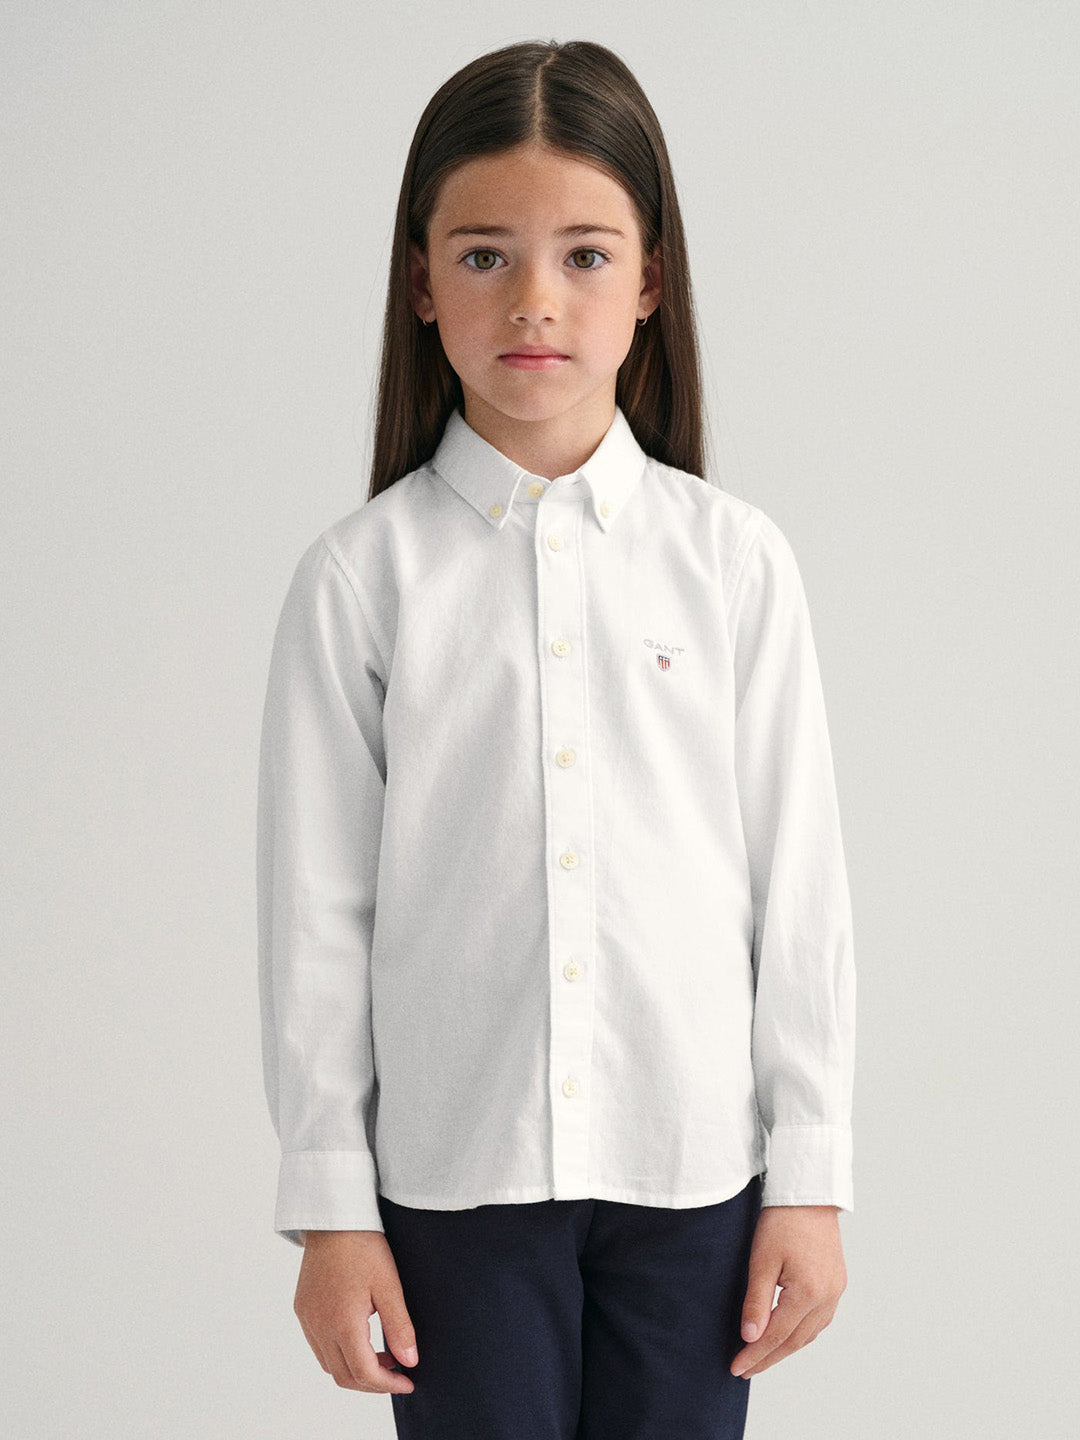 Gant Boys White Solid Collar Shirt